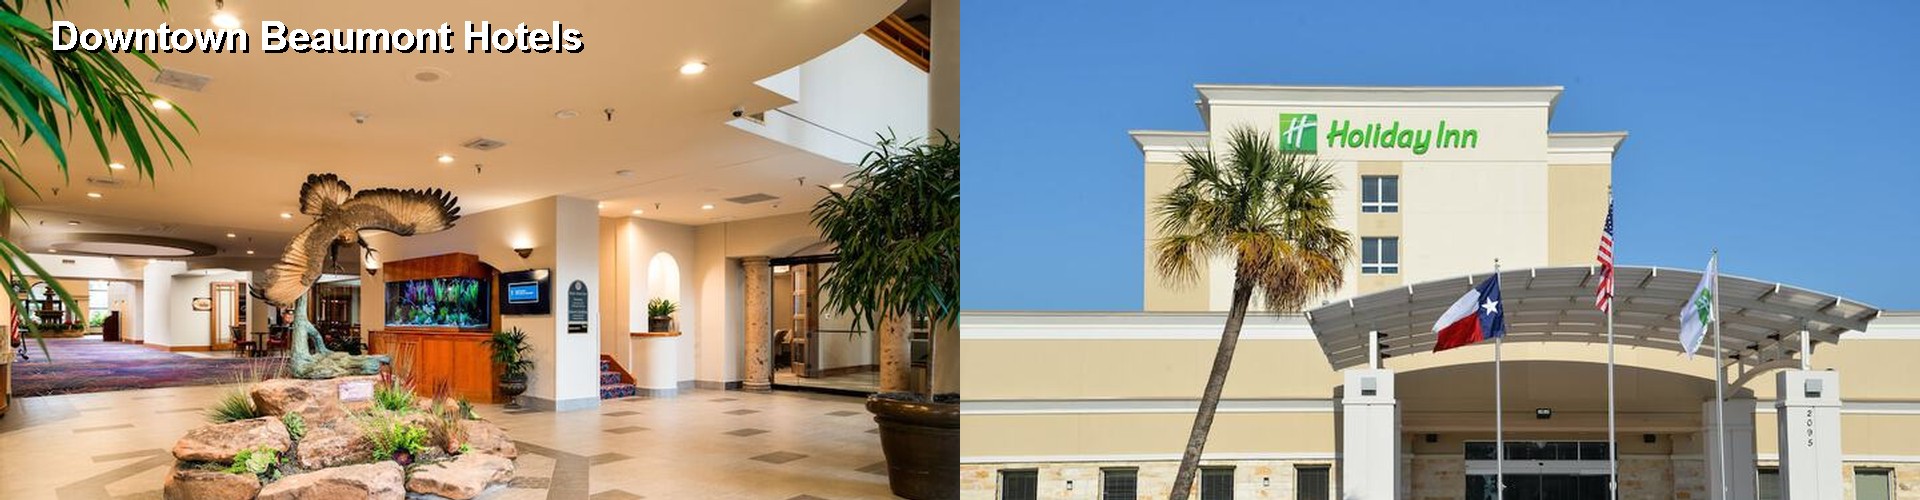 3 Best Hotels near Downtown Beaumont